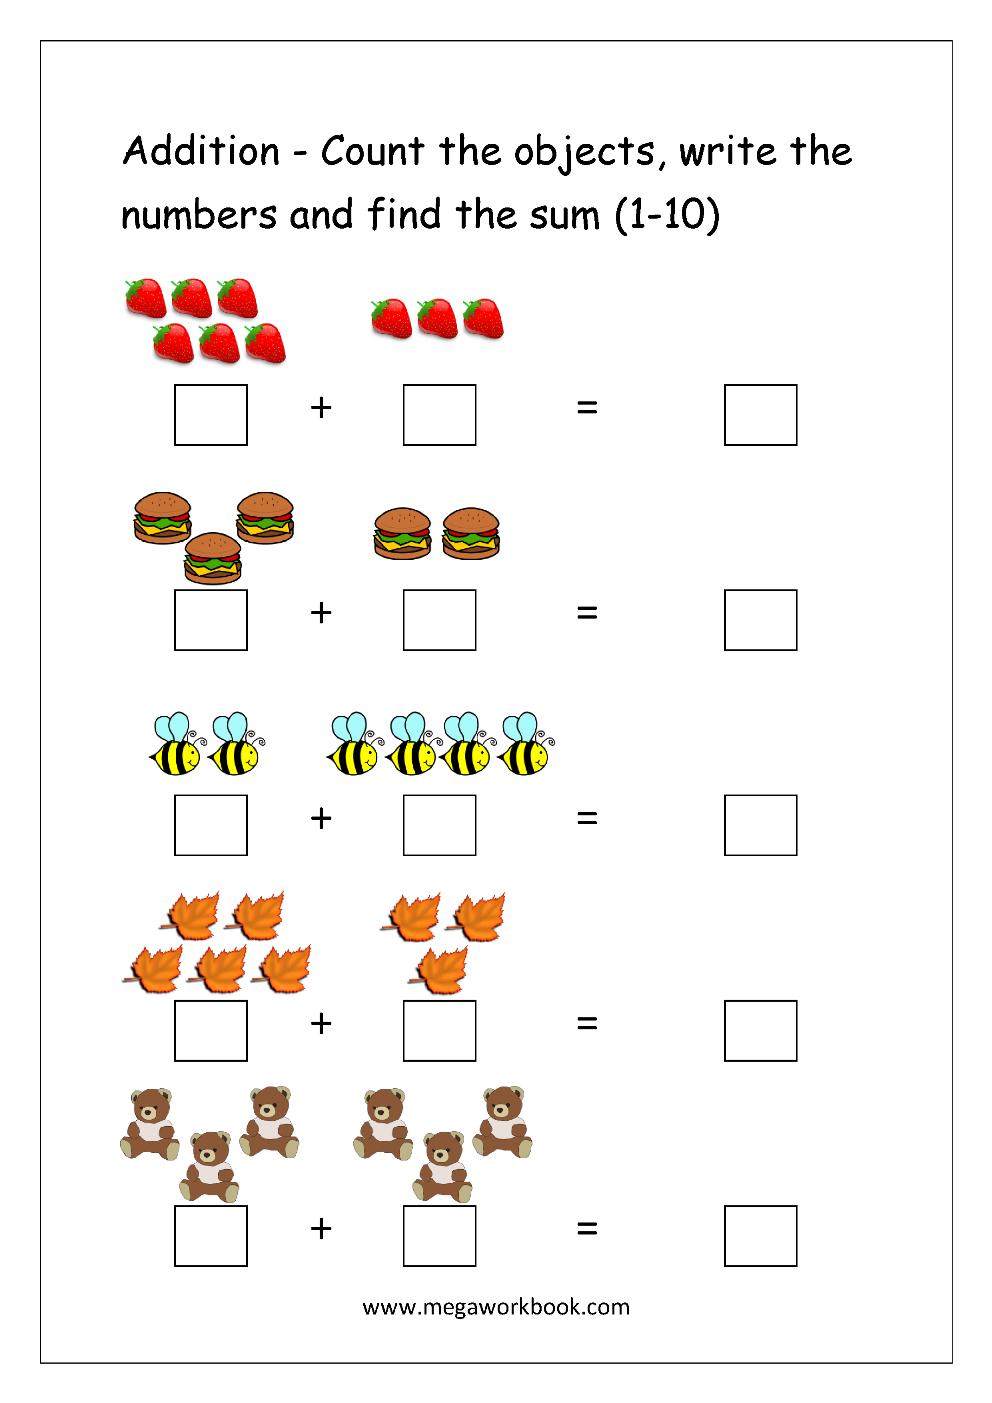 Free Printable Number Addition Worksheets 1 10 For Kindergarten And Grade 1 Addition On 